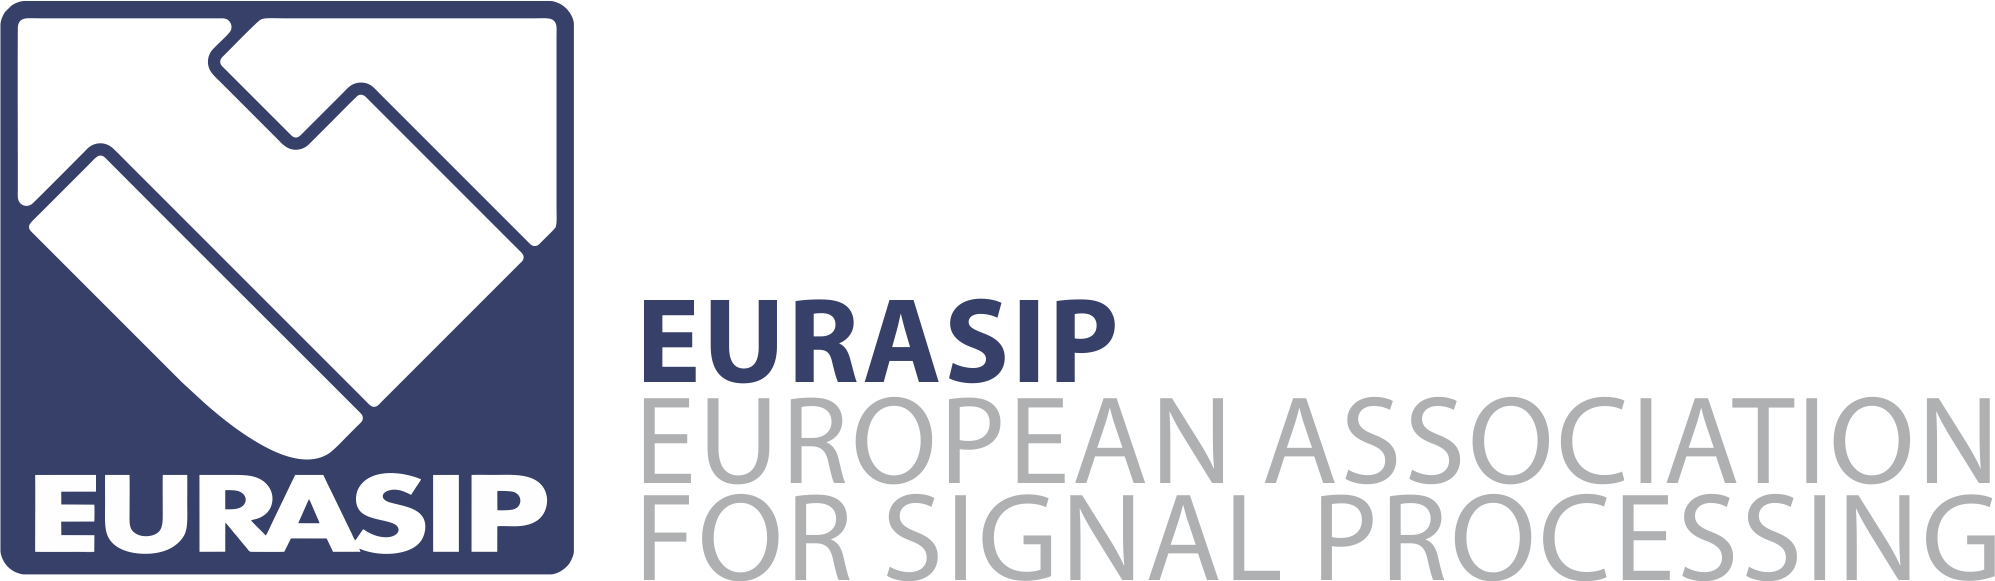 eurasip-logo-trans02